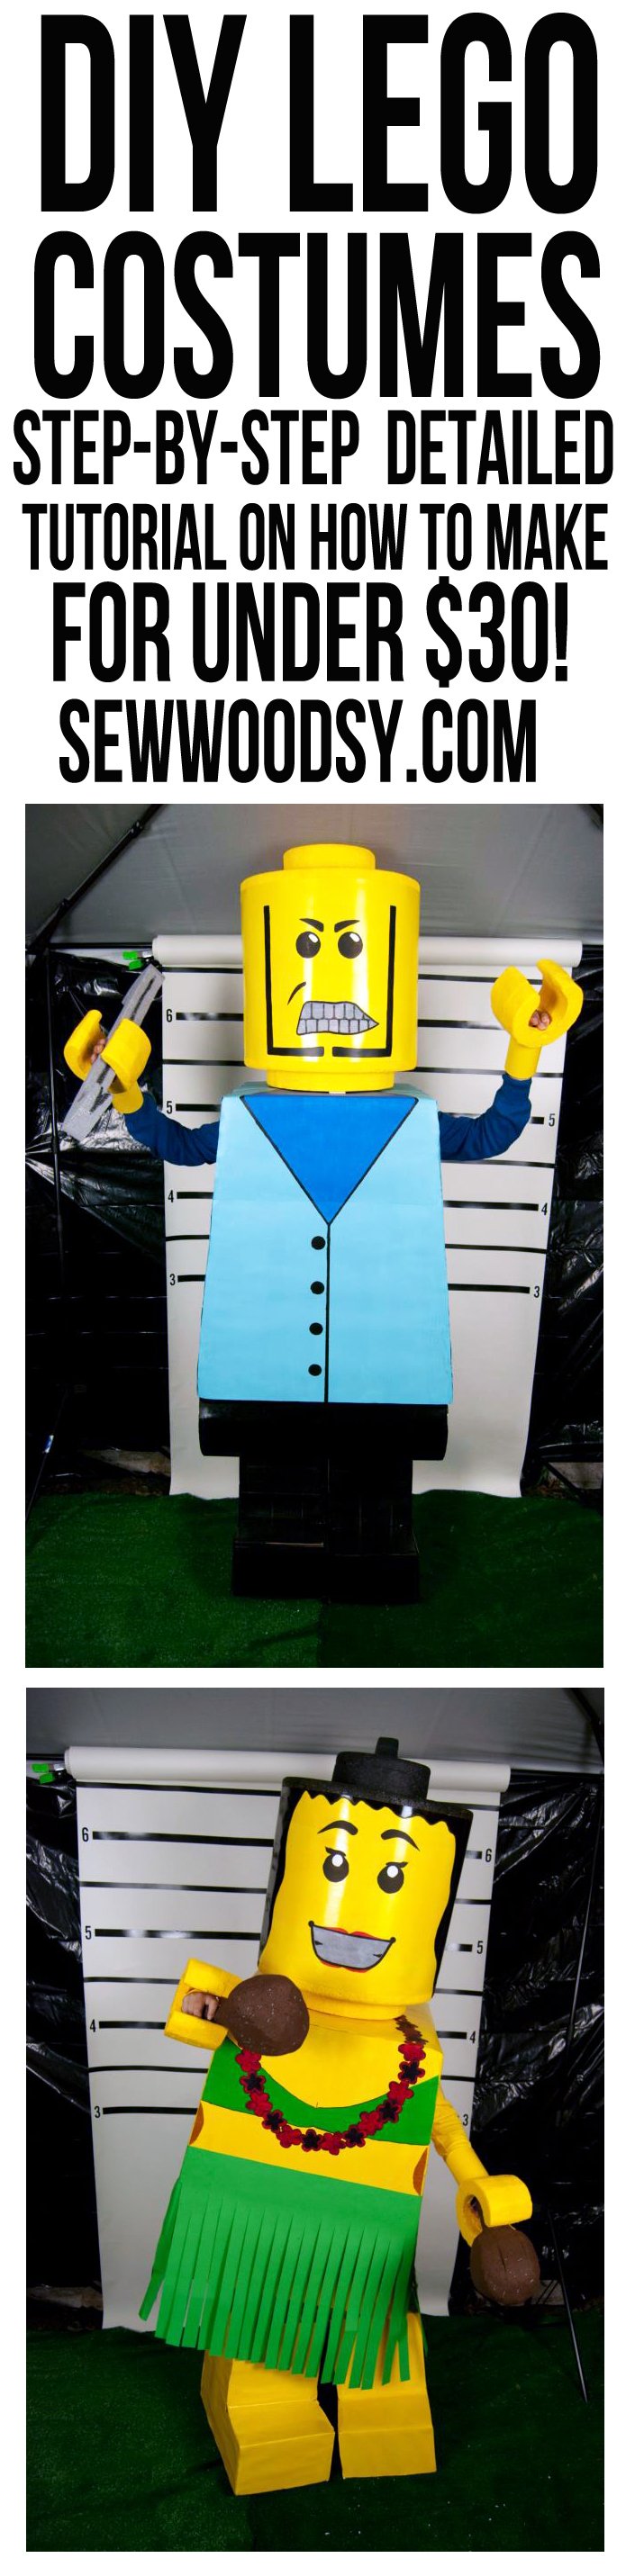 DIY Lego Costumes from SewWoodsy.com #Halloween #Costume